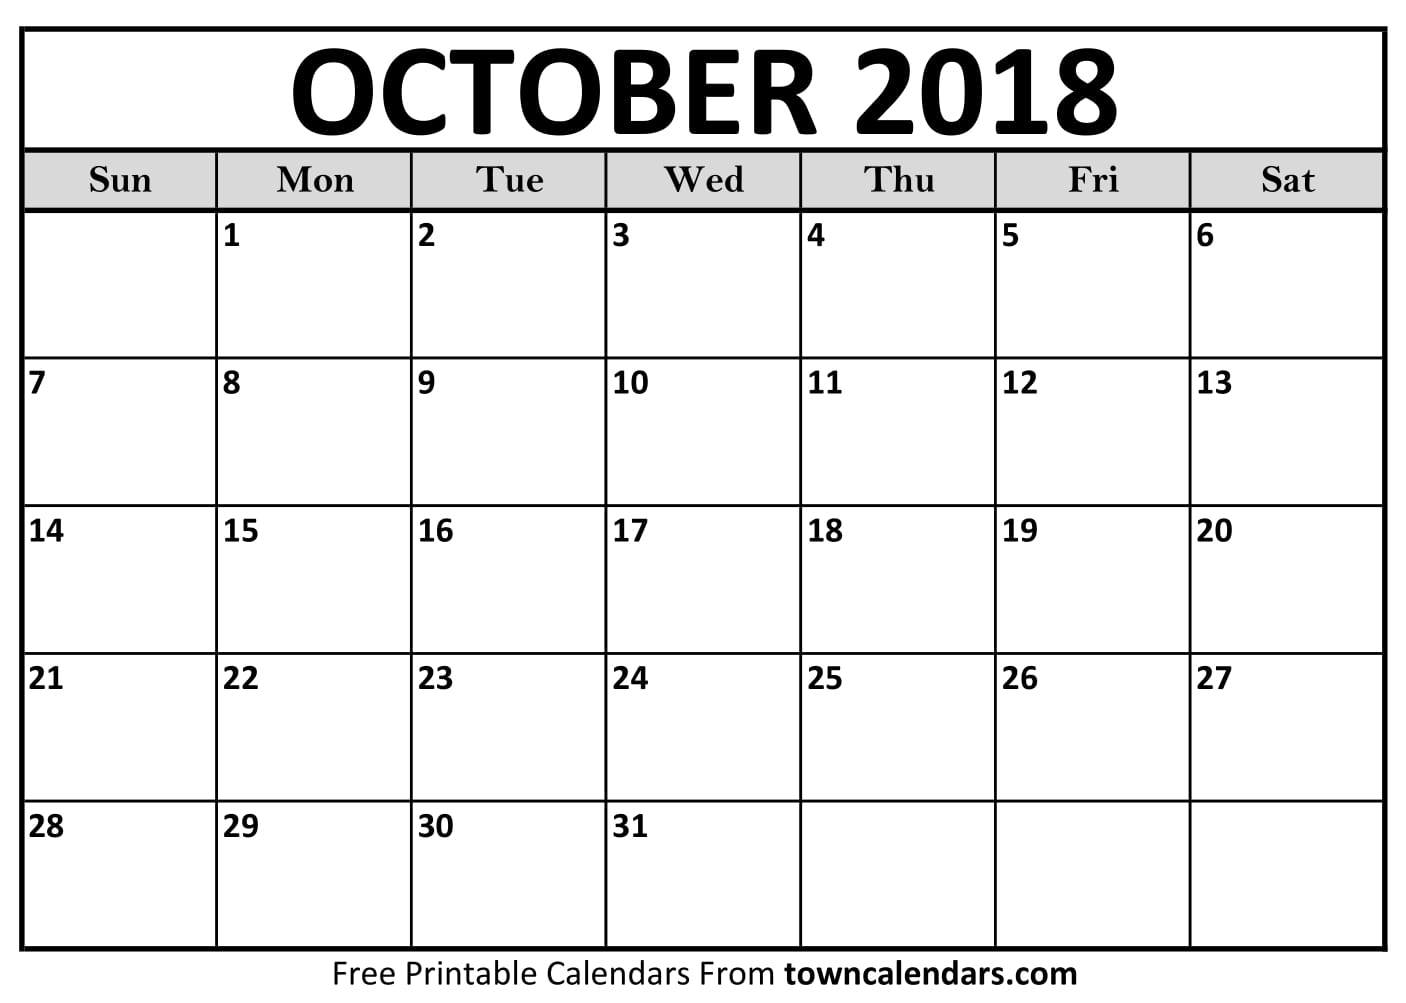 october calendar 2018